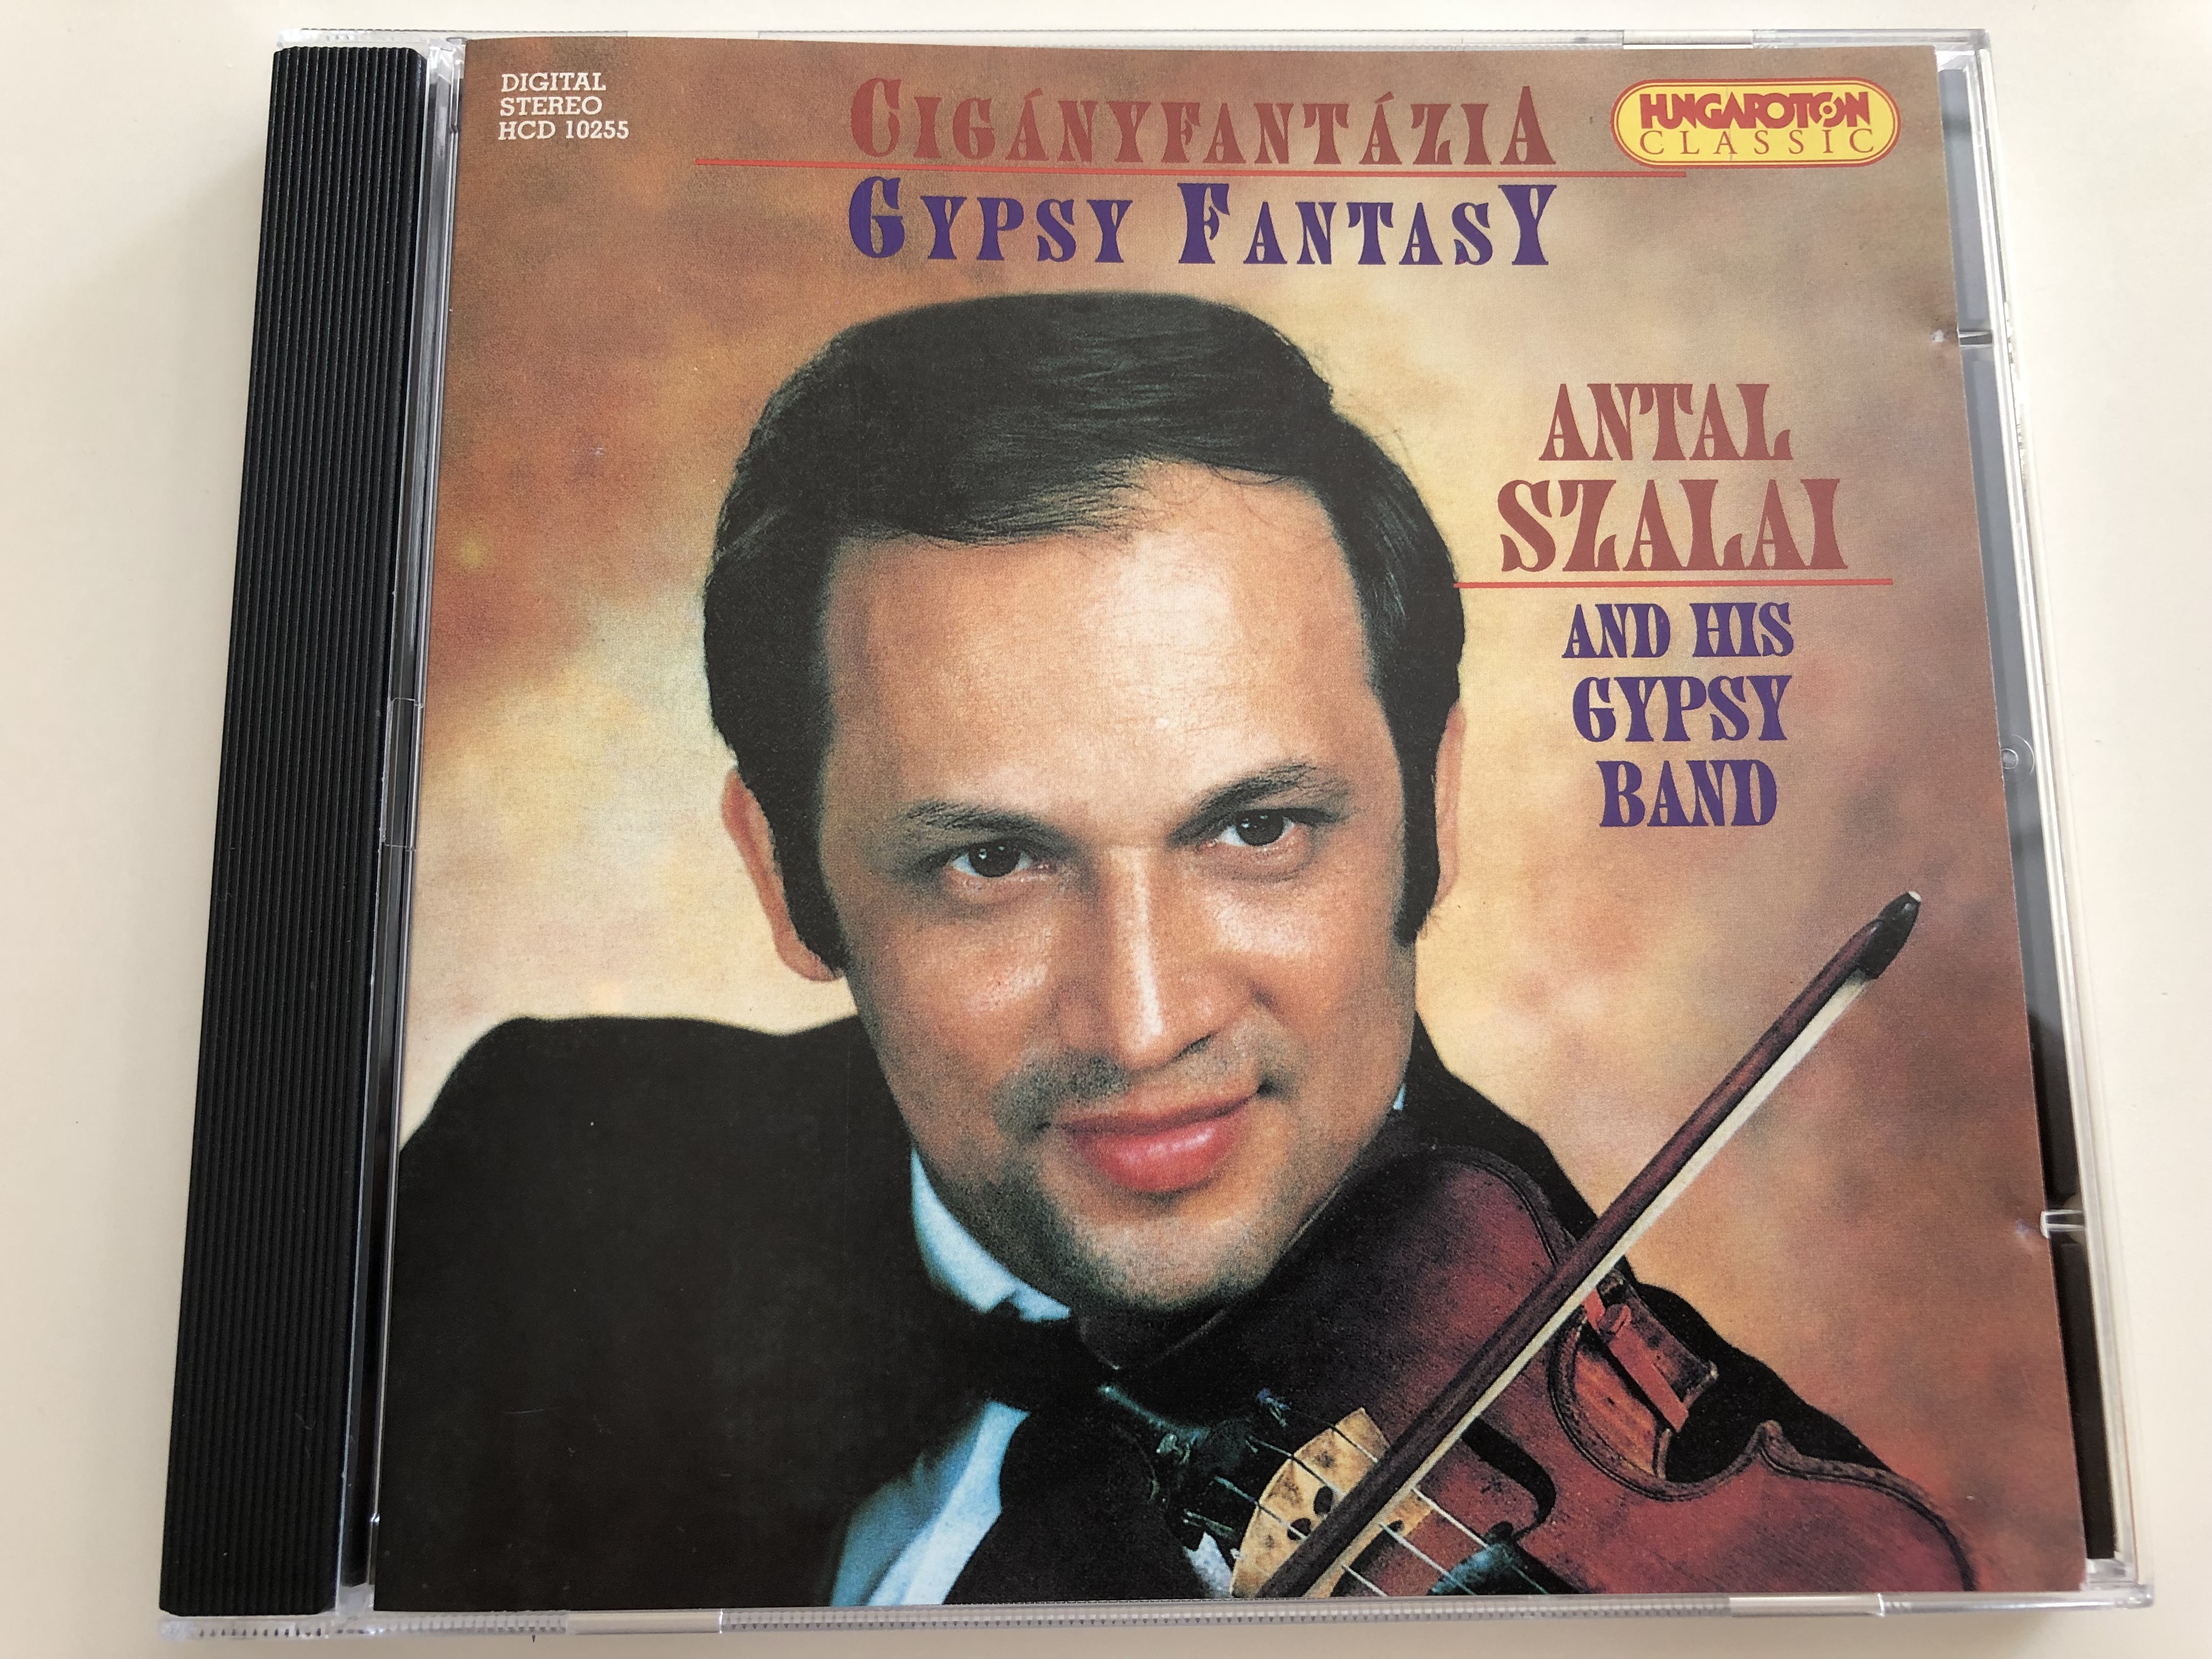 gypsy-fantasy-cig-nyfant-zia-antal-szalai-and-his-gypsy-band-hungaroton-classic-audio-cd-1997-hcd-10255-1-.jpg